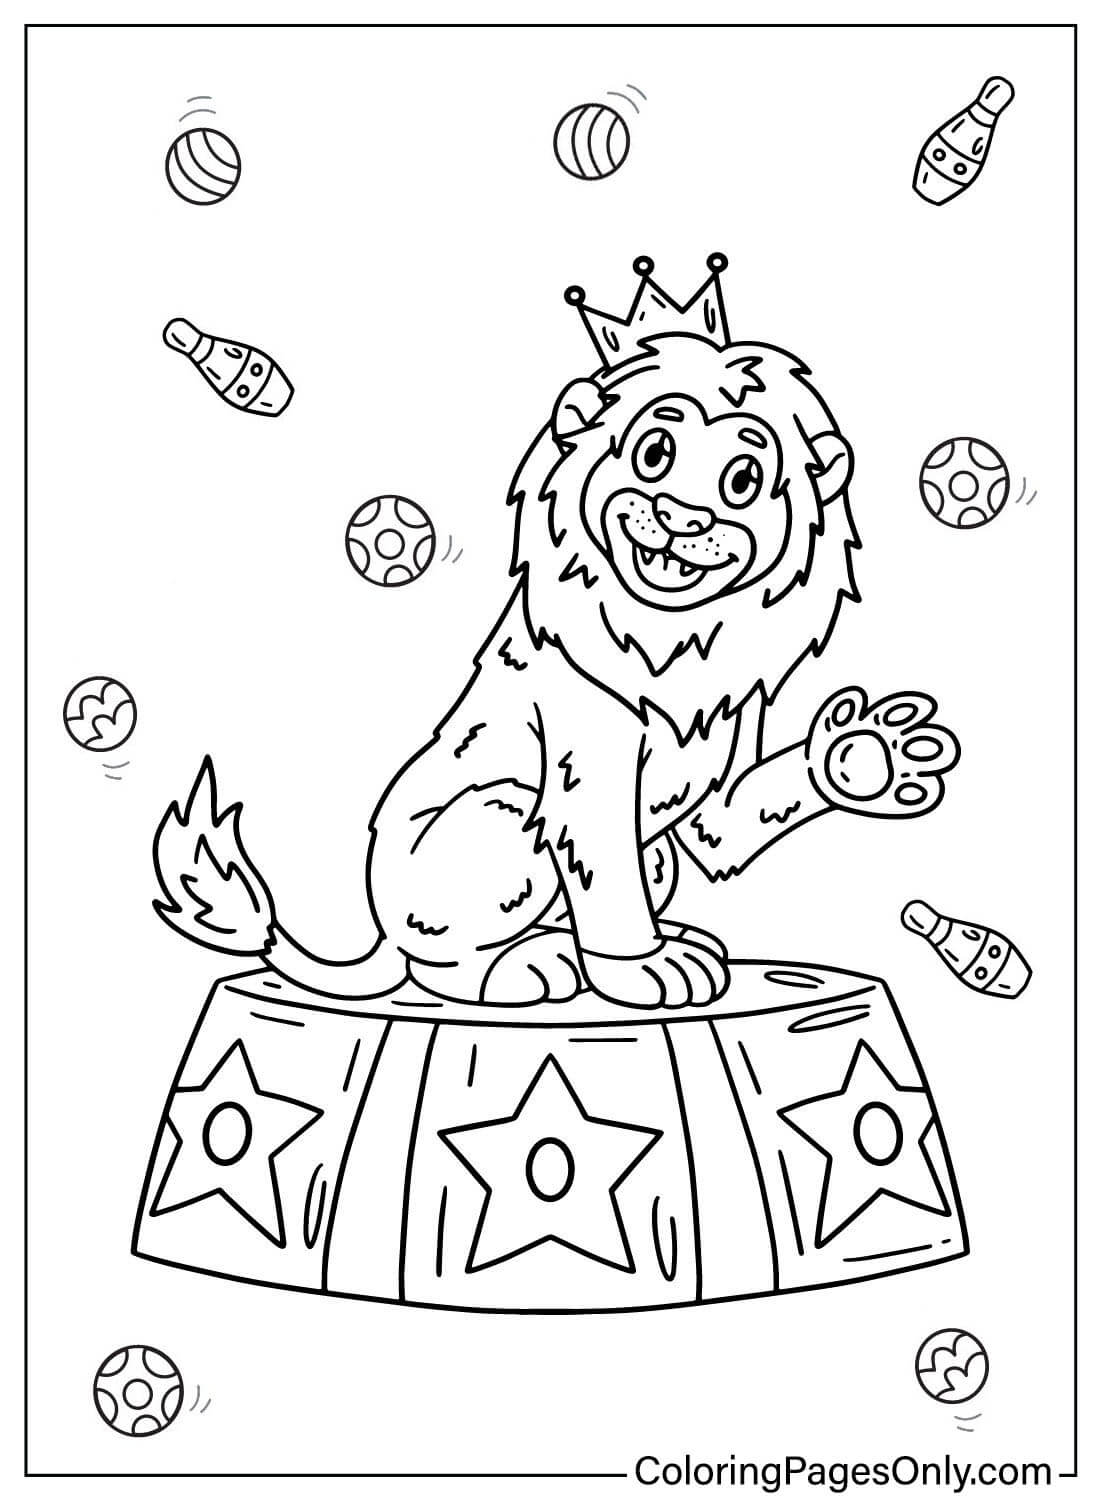 Página para colorear de león de circo de León